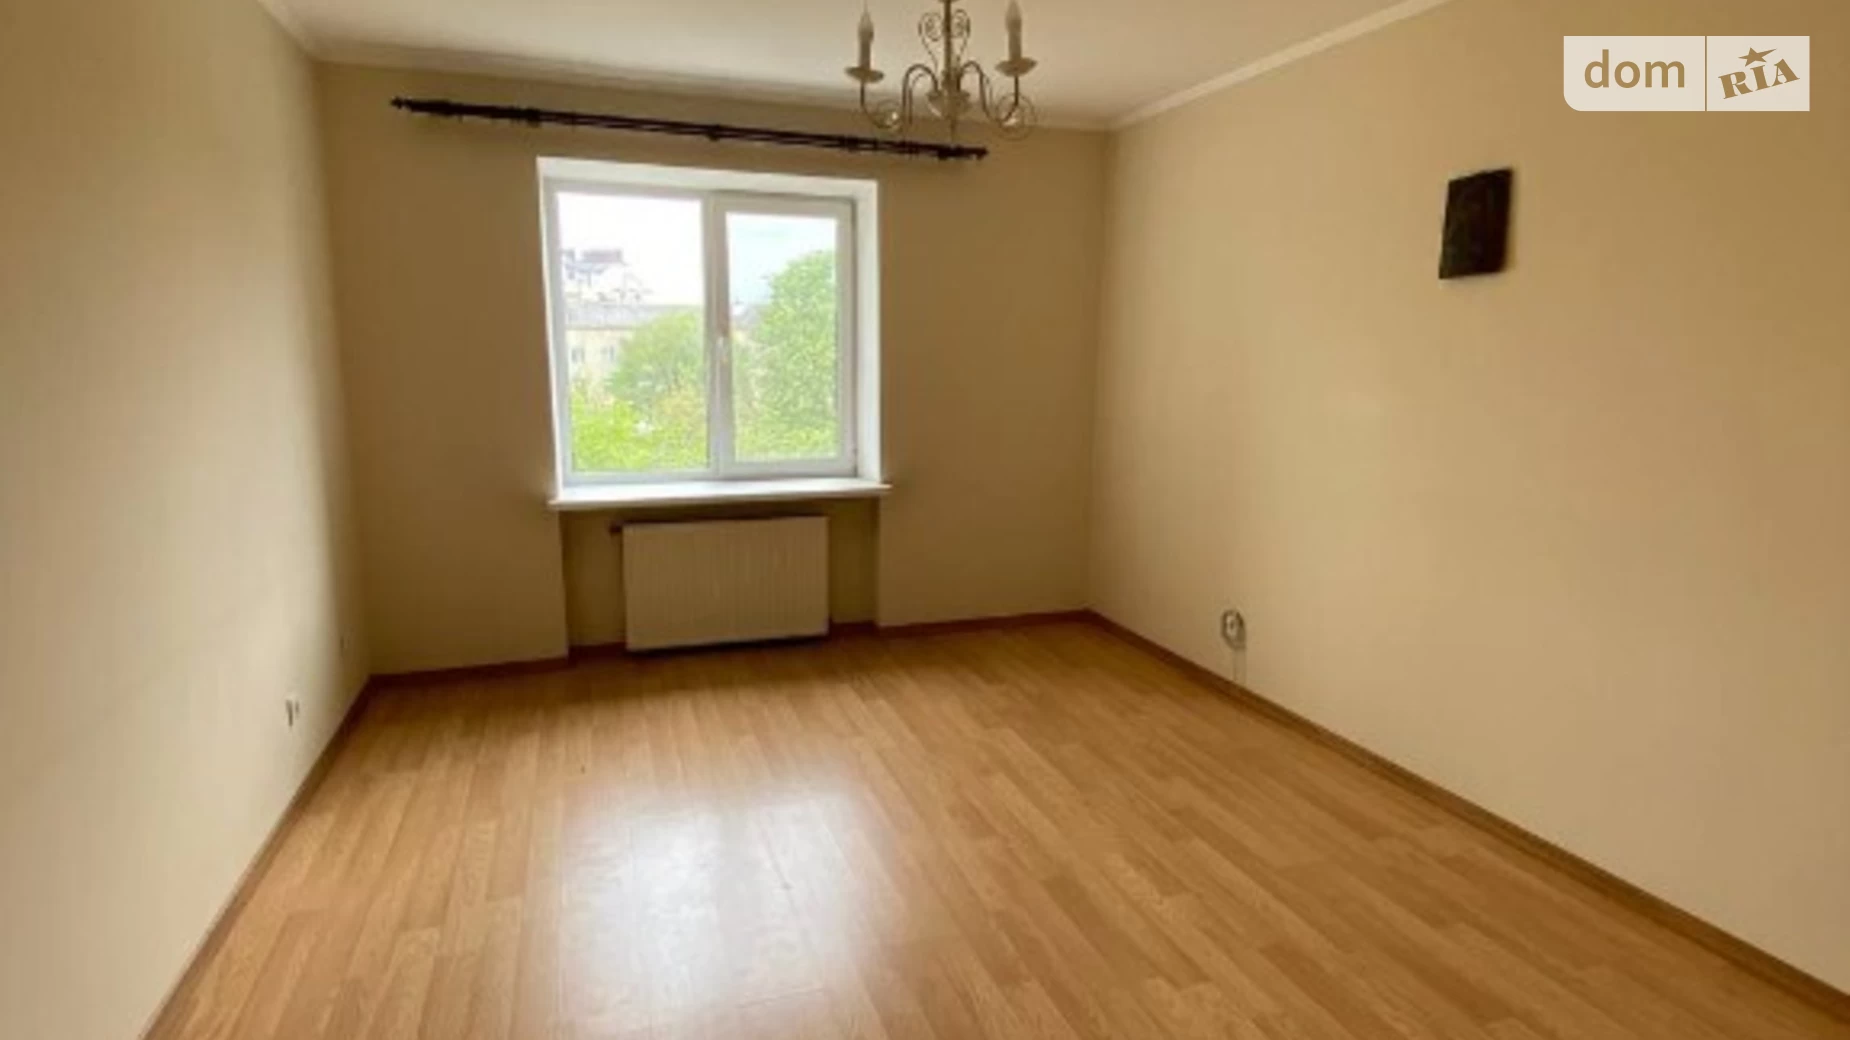 Продается 5-комнатная квартира 163.8 кв. м в Ивано-Франковске, вул. Вячеслава Черновола